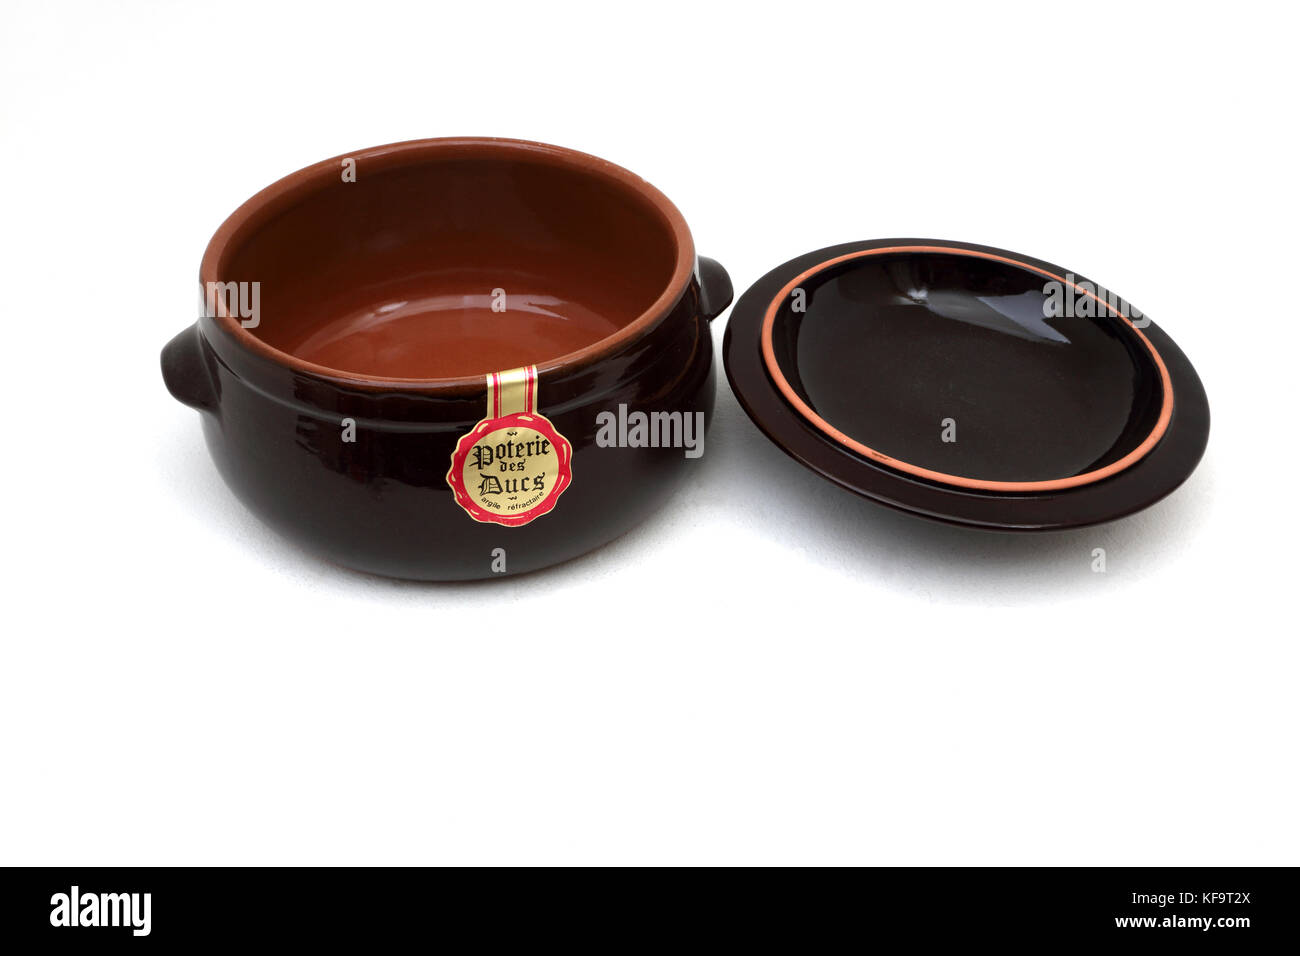 Veritable Poterie De Bourgogne Pottery Casserole Dish Made with Bourguignonne Clay Stock Photo